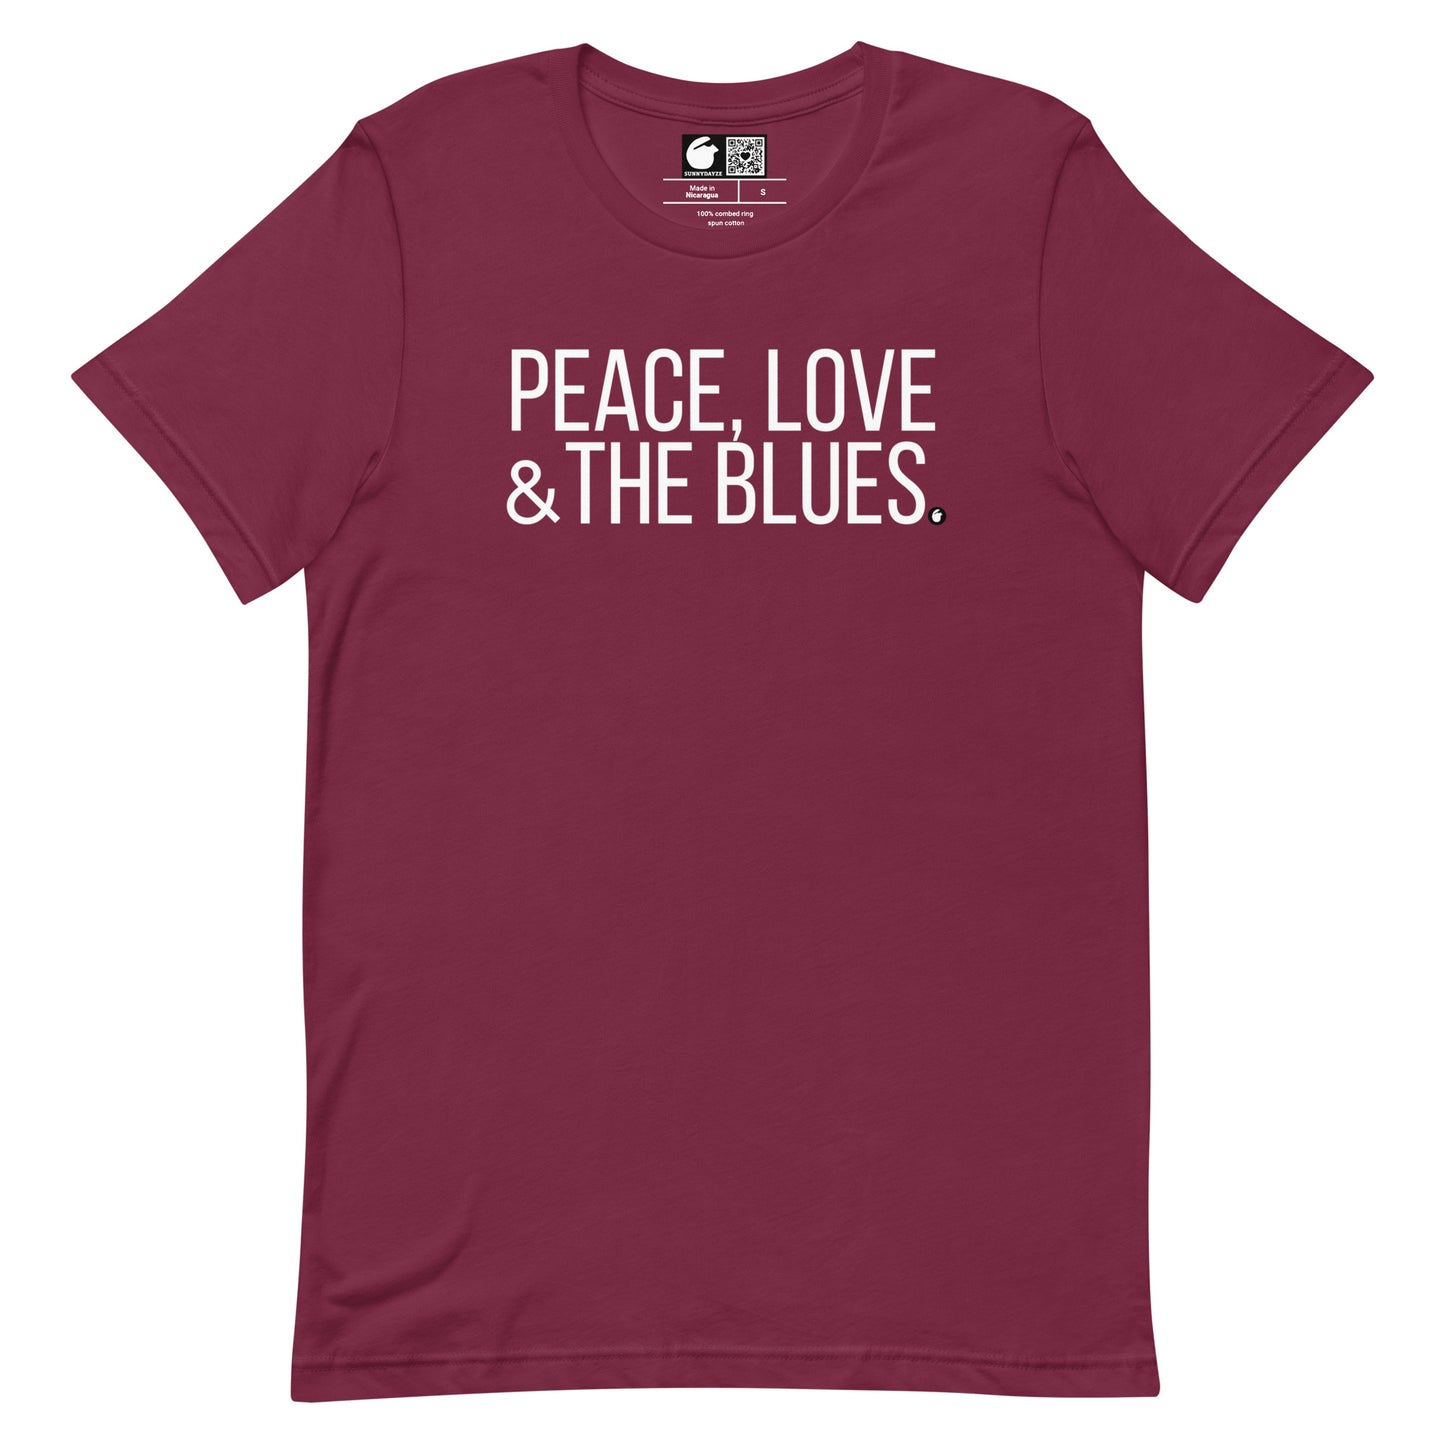 THE BLUES Short-Sleeve Unisex t-shirt